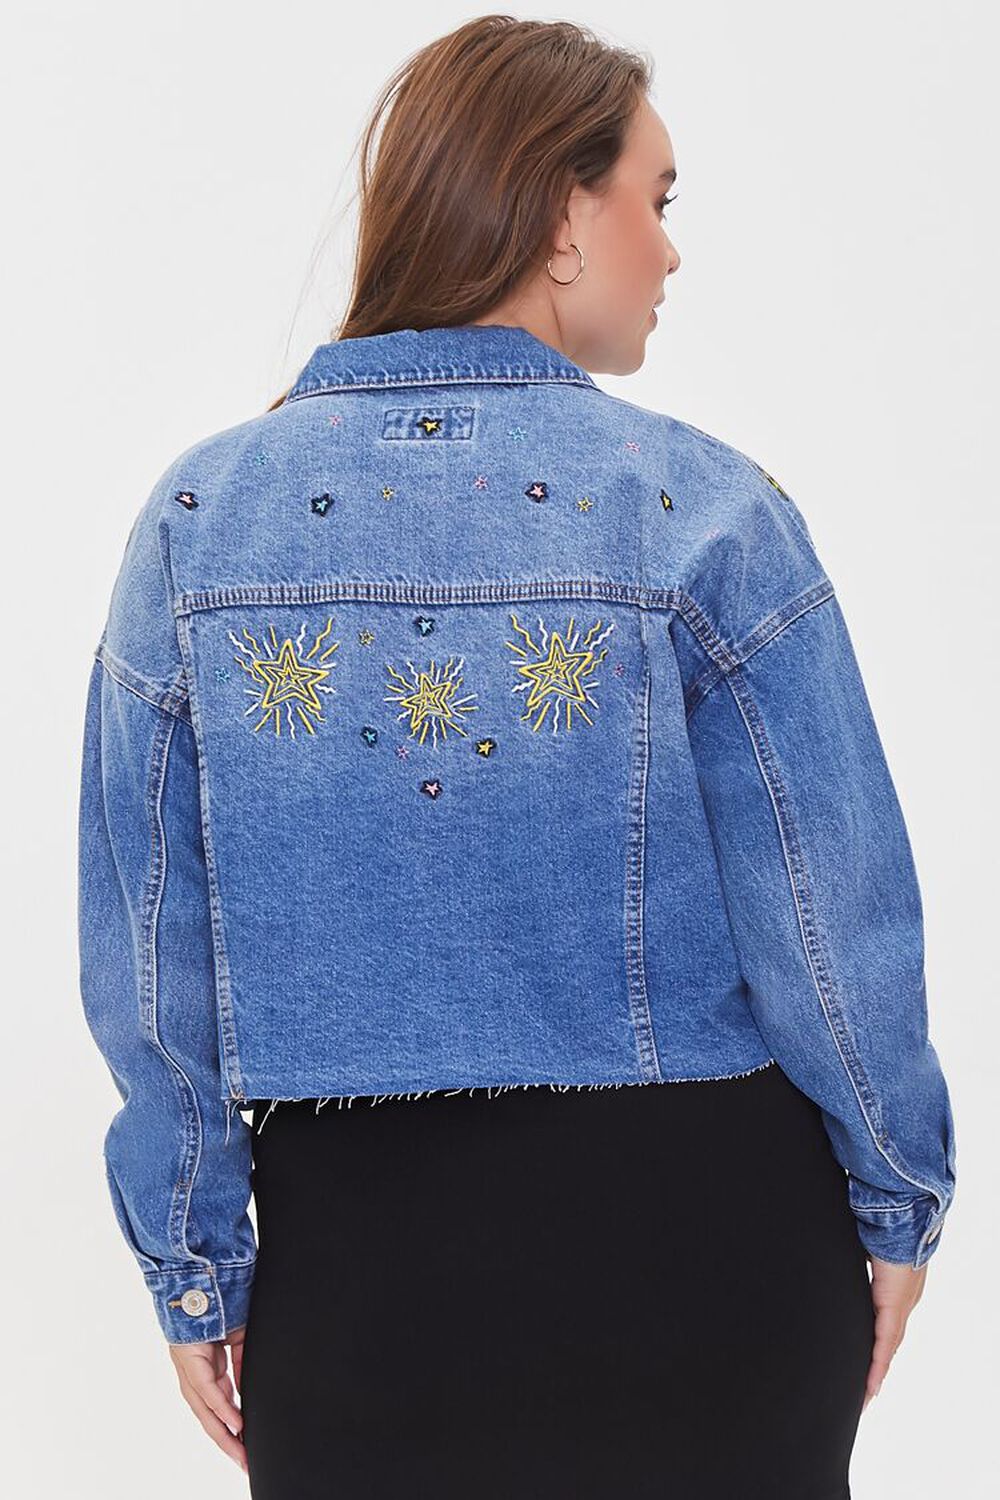 Plus Size Embroidered Star Denim Jacket, image 3